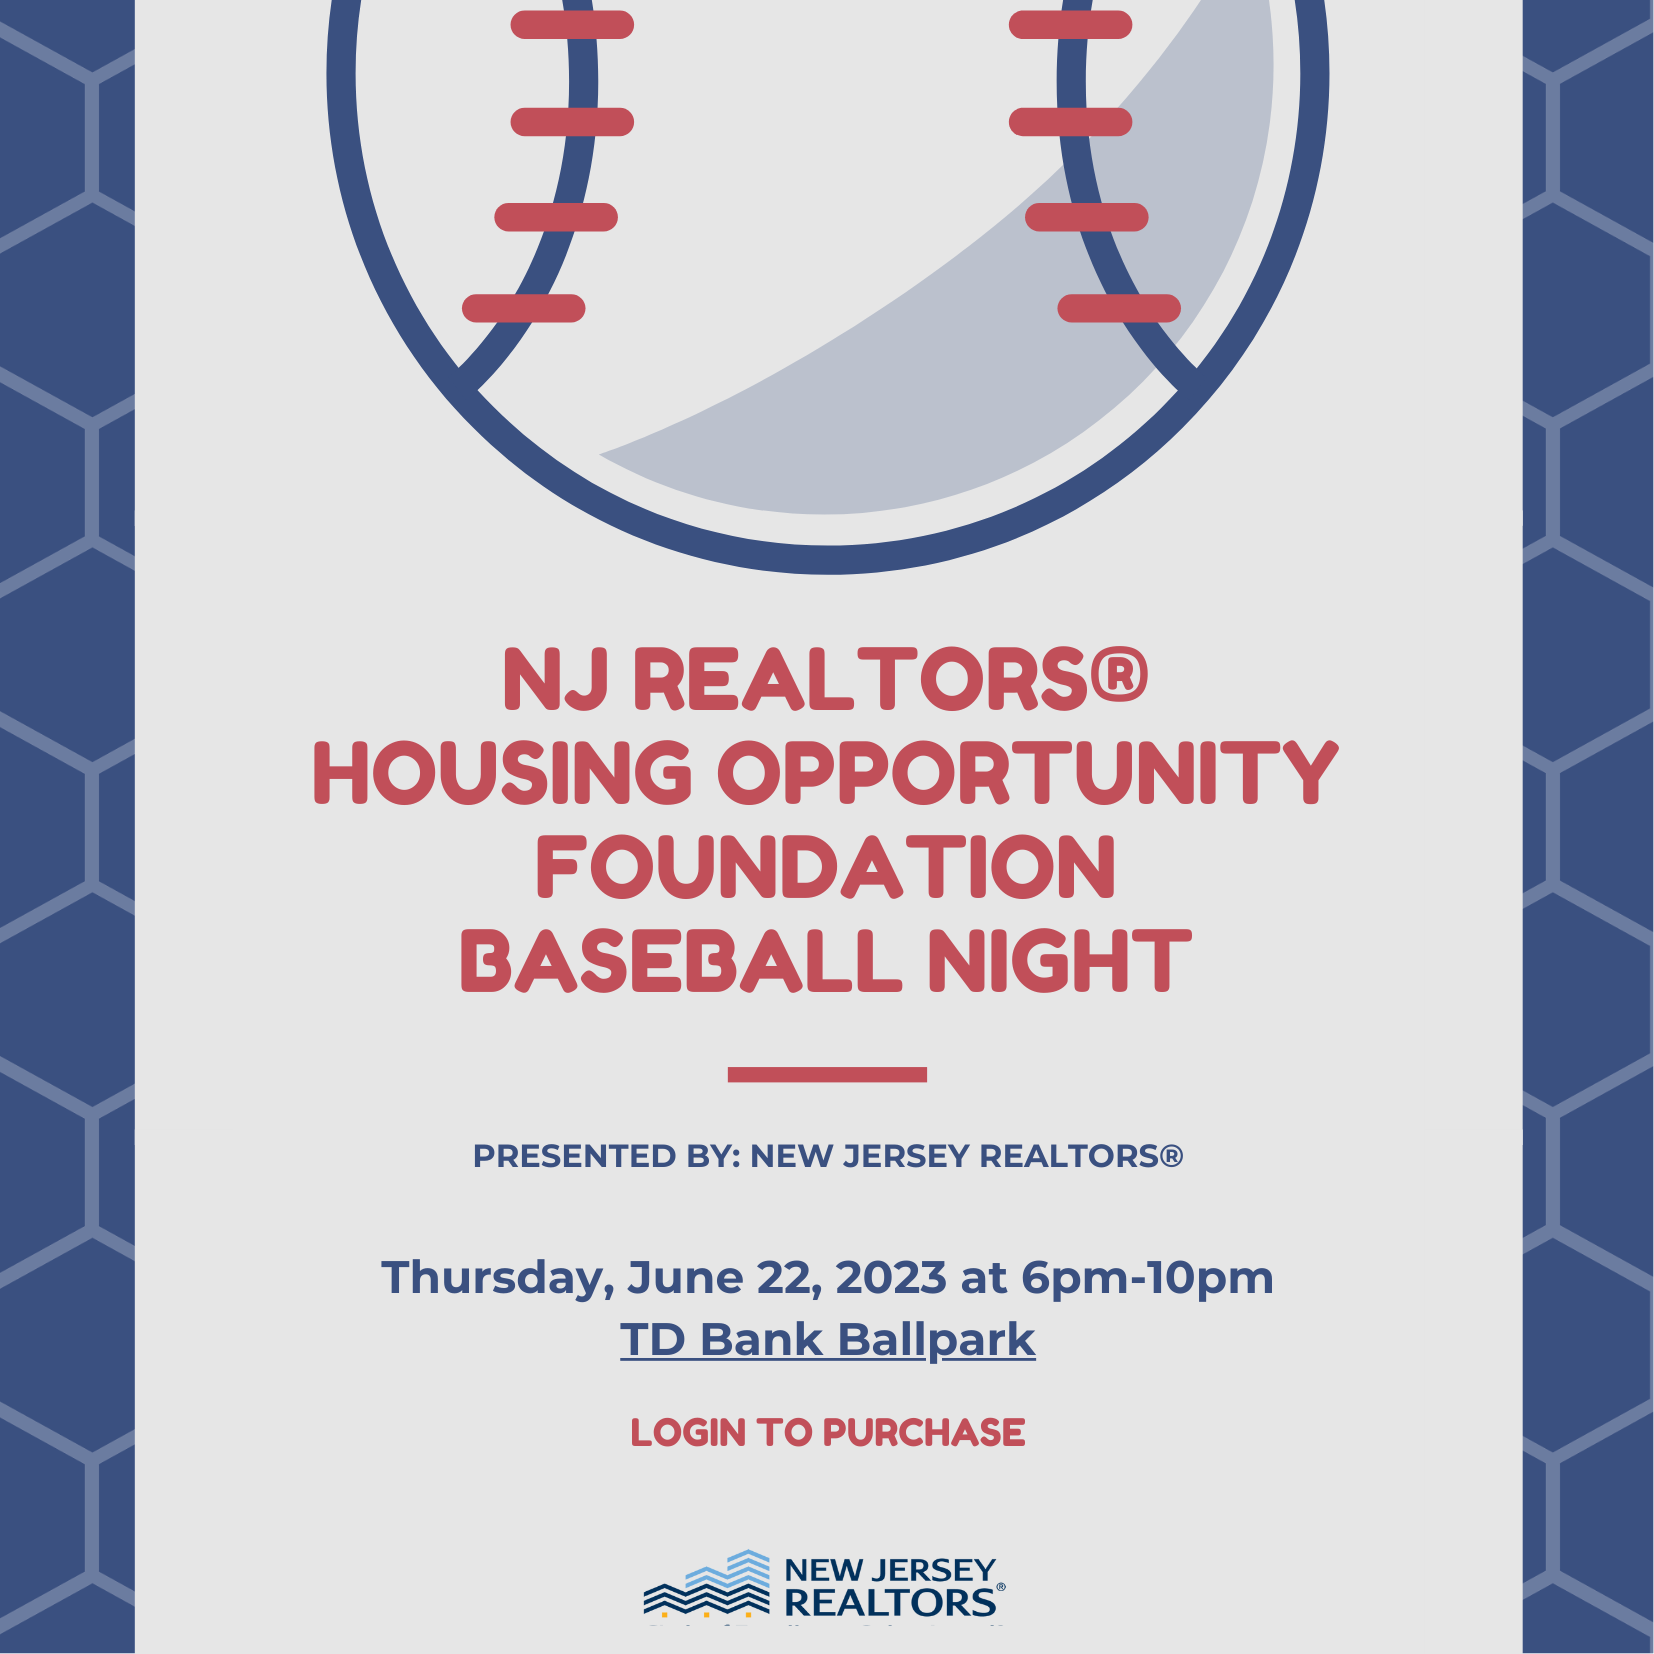 NJ REALTORS Housing Opportunity Foundation Baseball Night